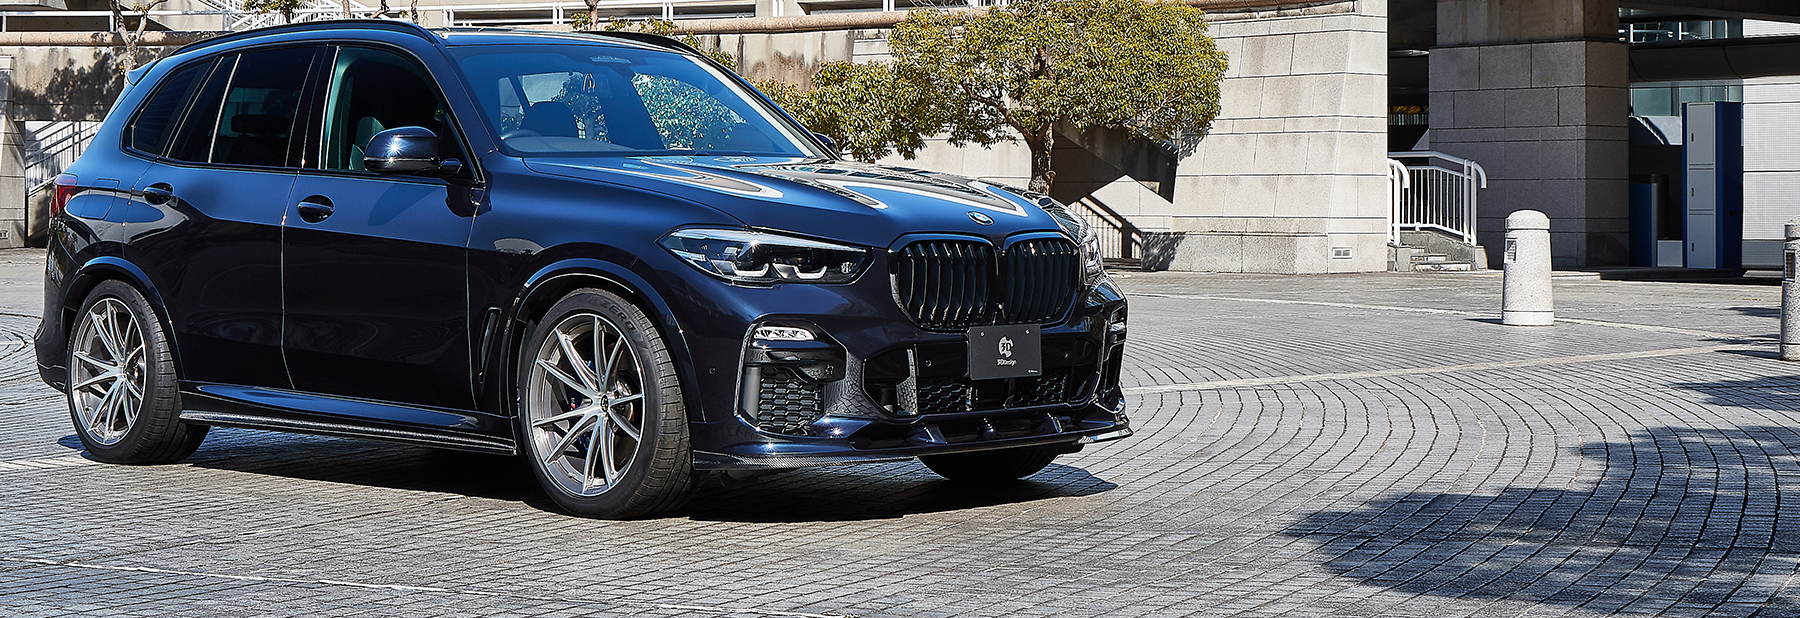 3DDesign / aerodynamics and body kits for BMW G05 X5